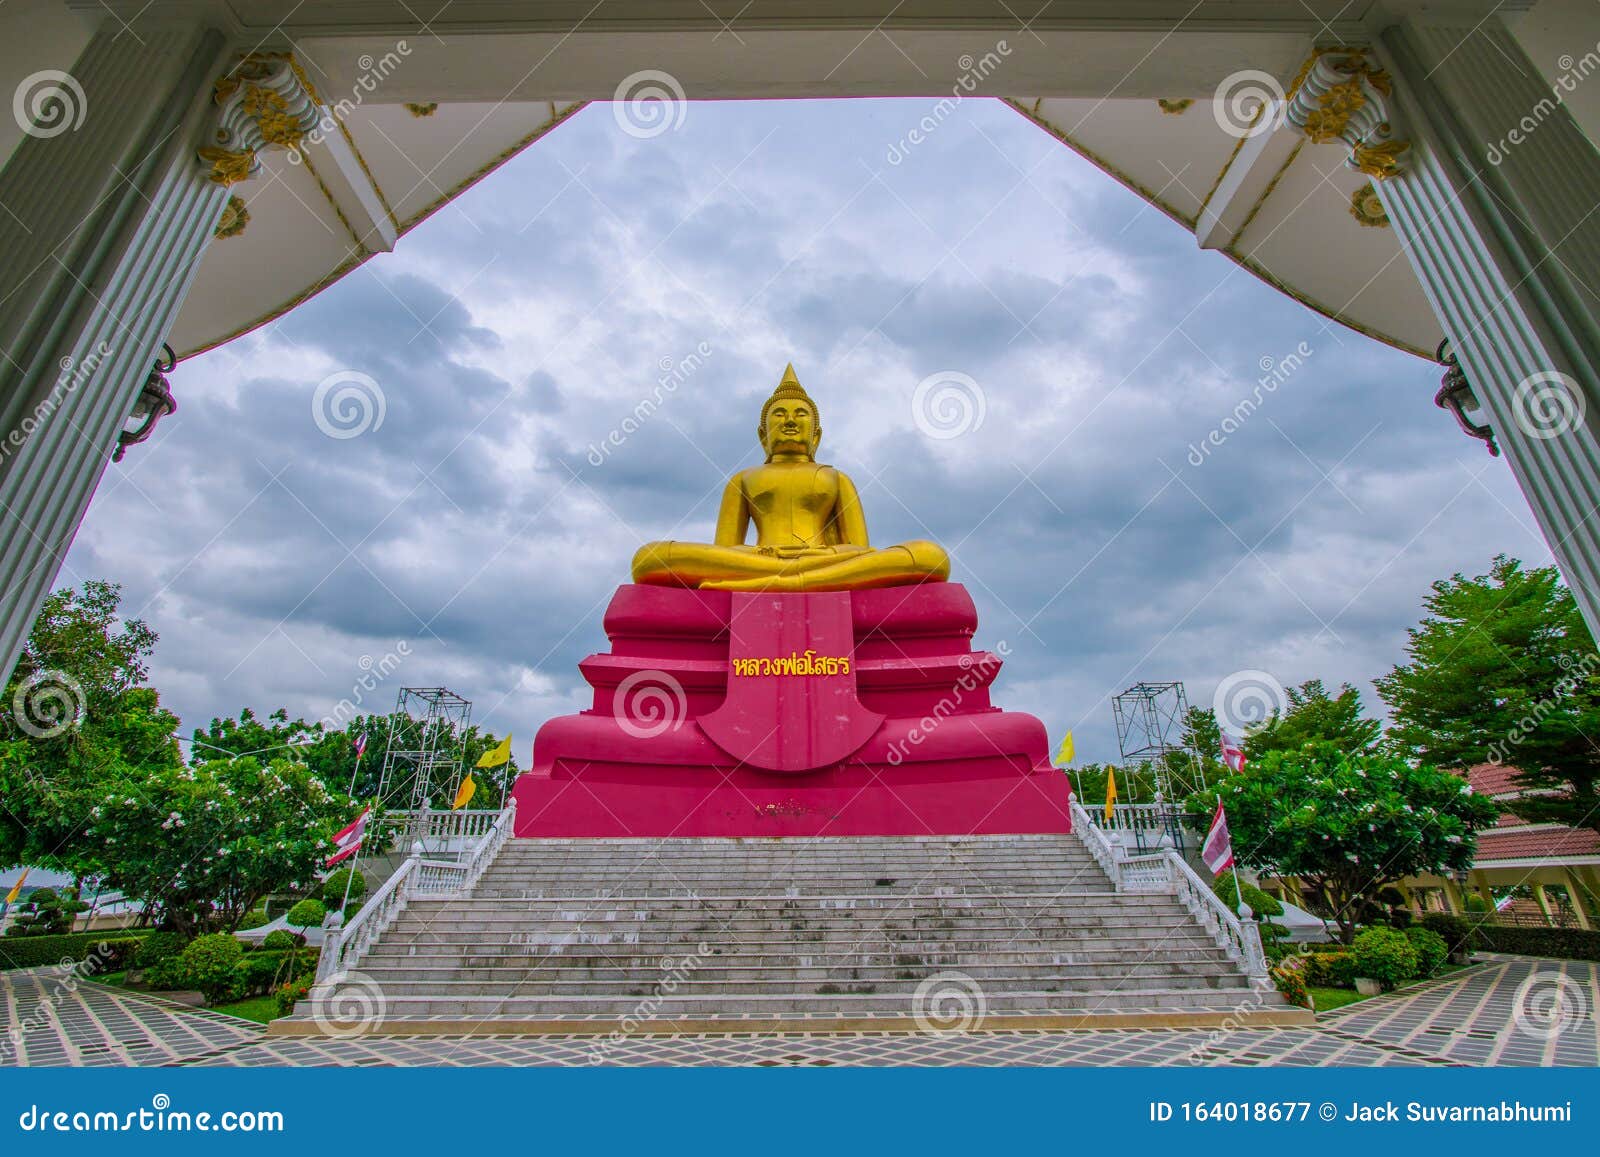 Large Gold Buddha Statue In Wat Bot Pathum Thani Thailand Stock Image Image Of Flower Beautifully